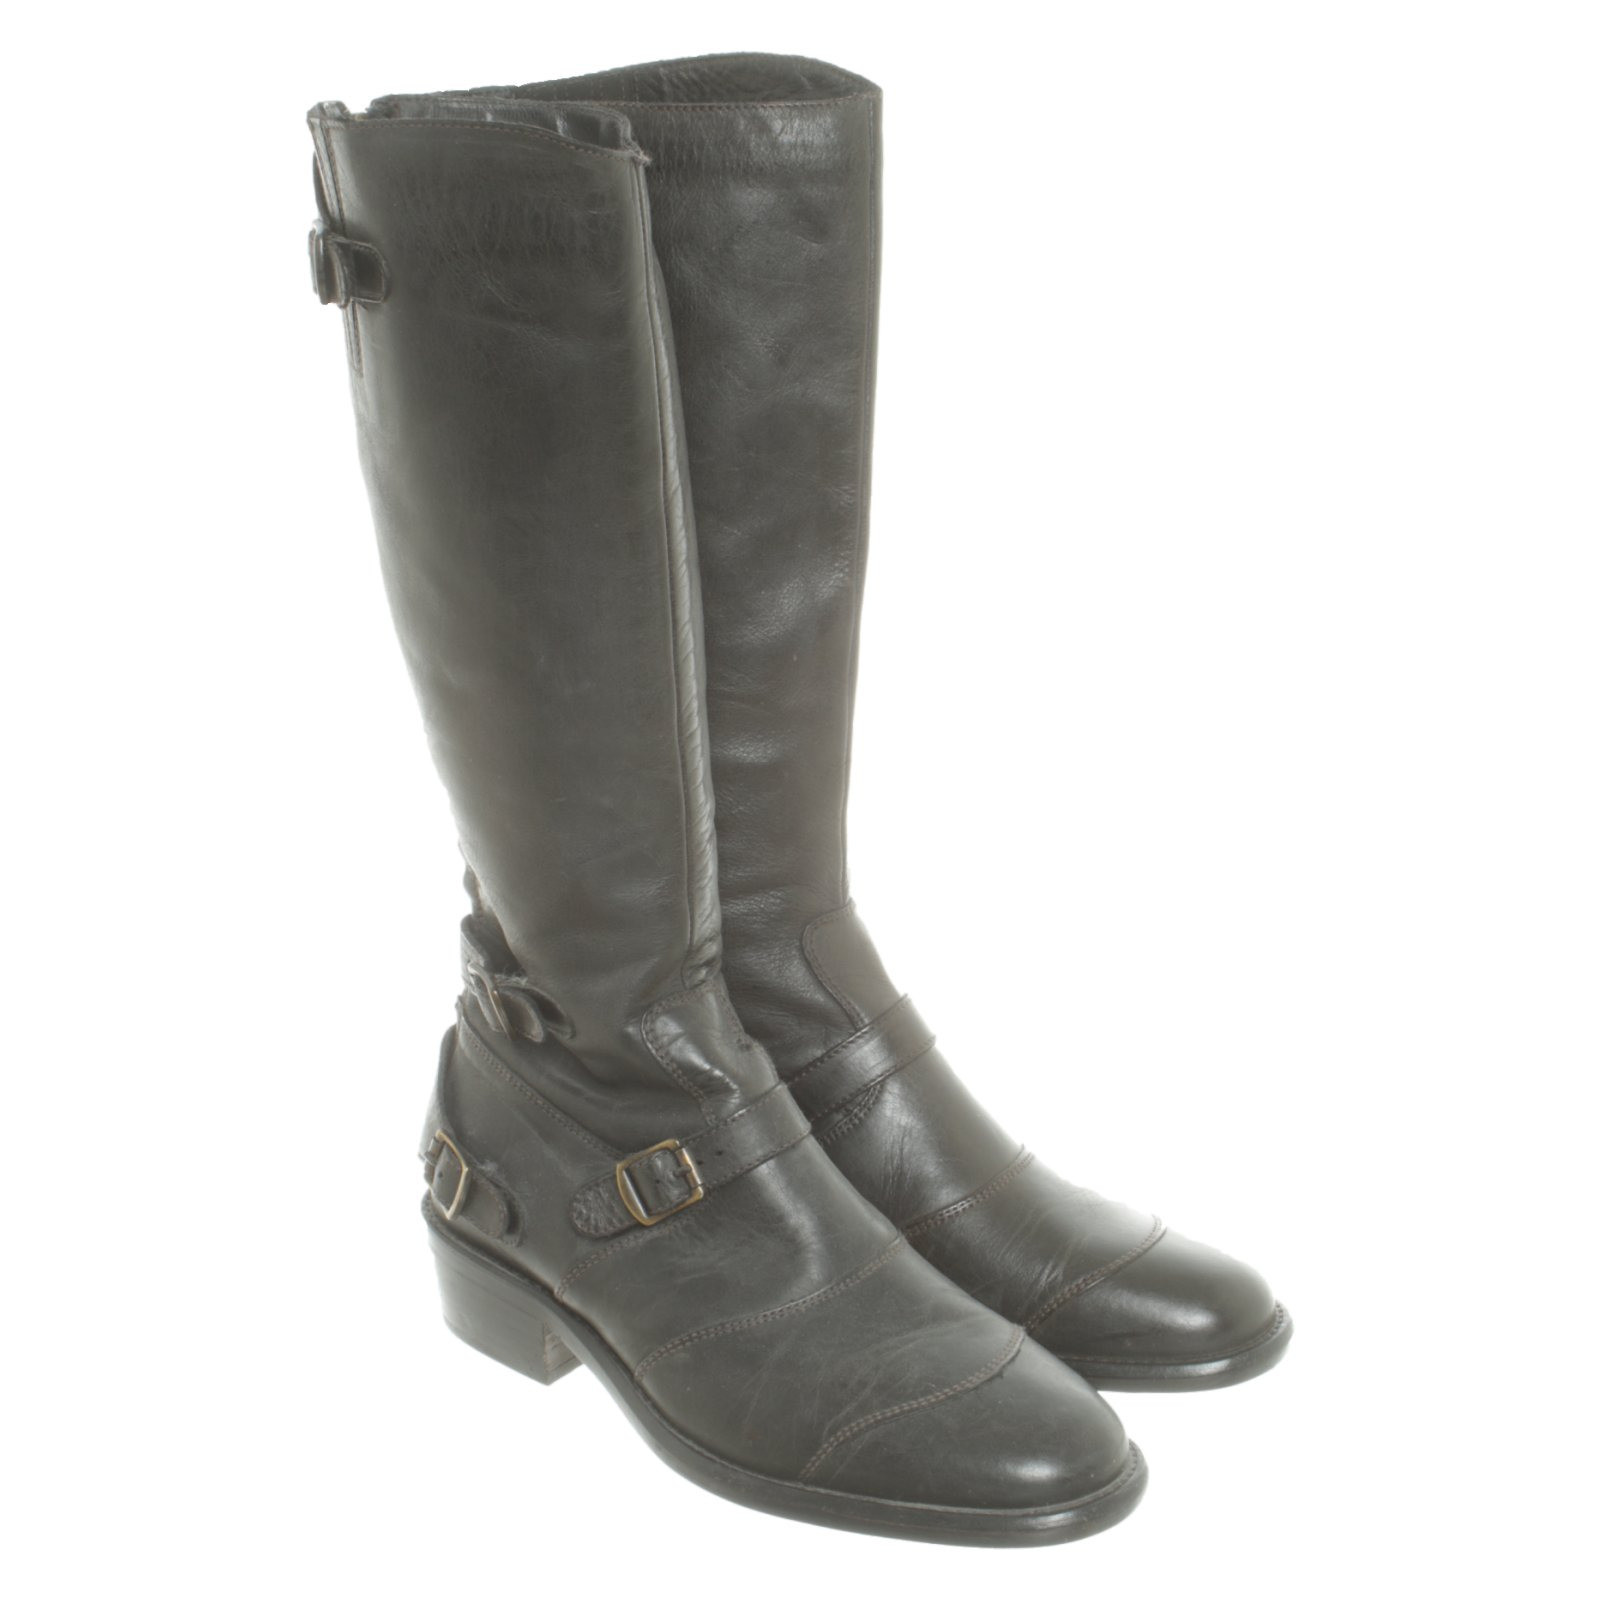 Gracias corazón Restricción BELSTAFF Women's Boots Leather in Black Size: EU 38